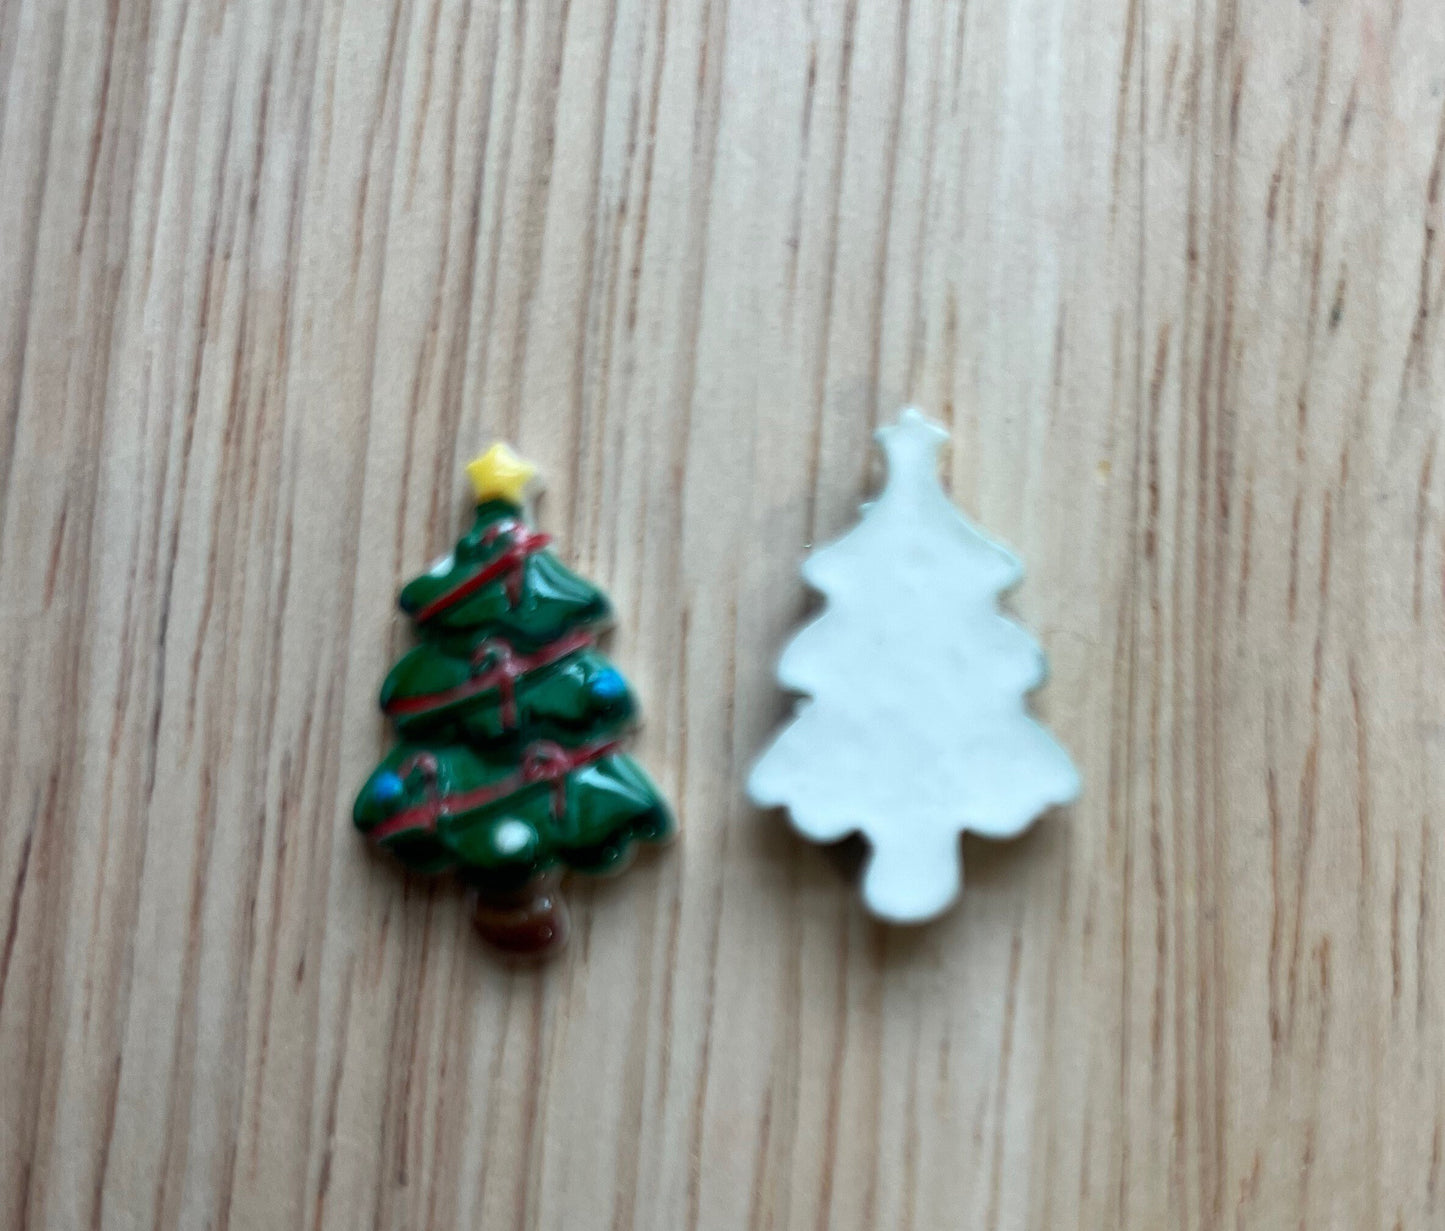 Mini ÁRBOL DE NAVIDAD Objeto-Tema navideño Minis-Terapia del habla Mini Objetos-Veo Objetos--Mini Árbol de Navidad de Resina-Minis para logopedia